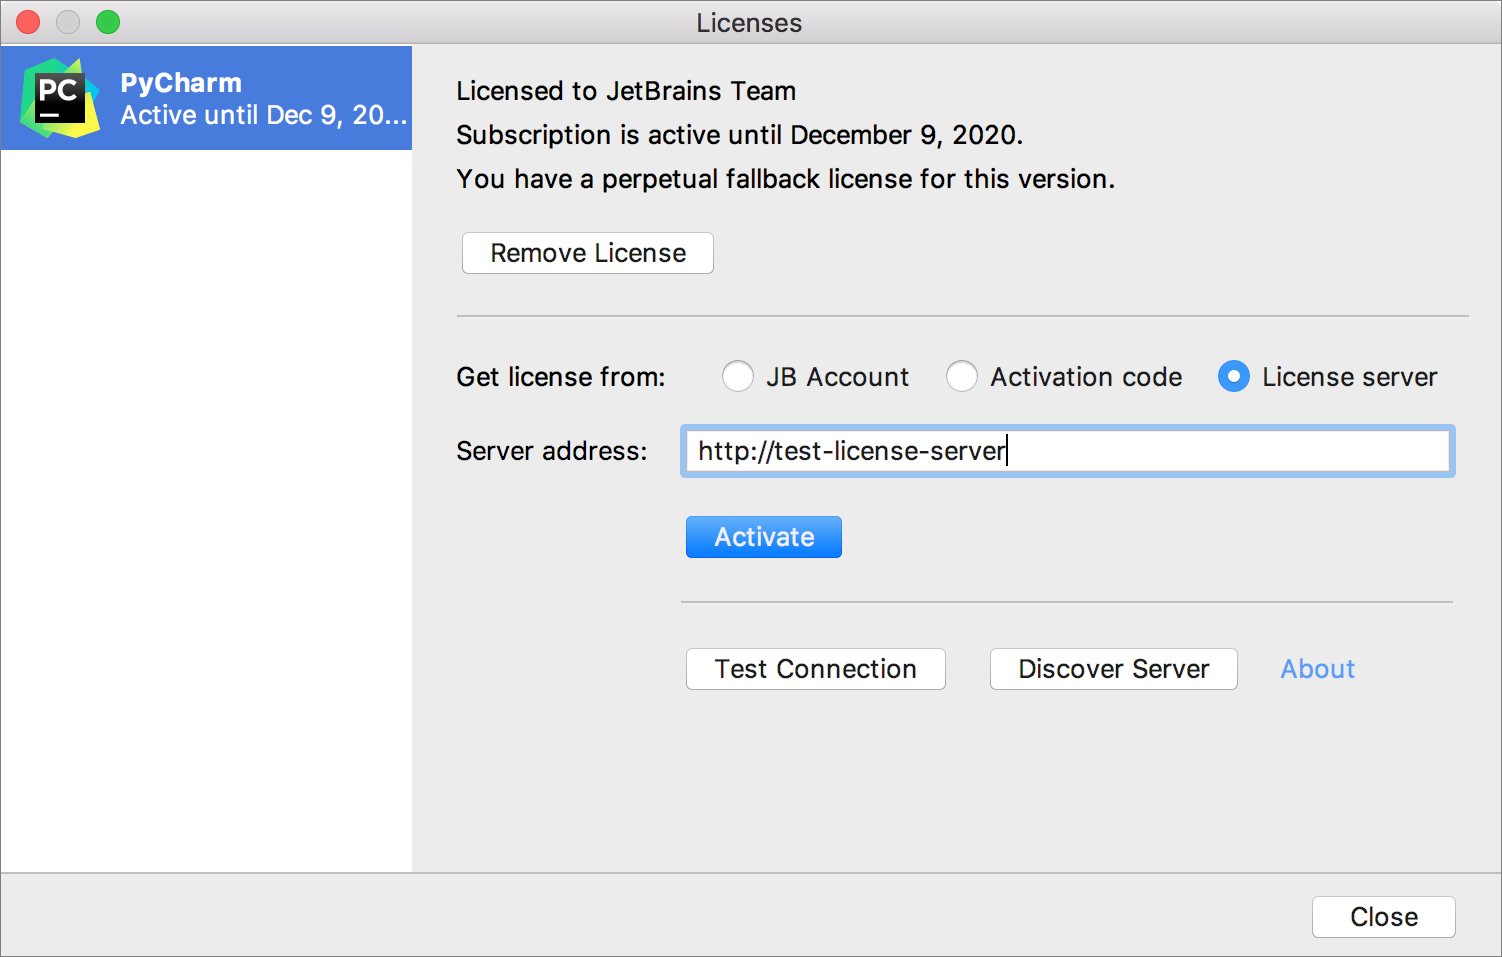 download jetbrains account license